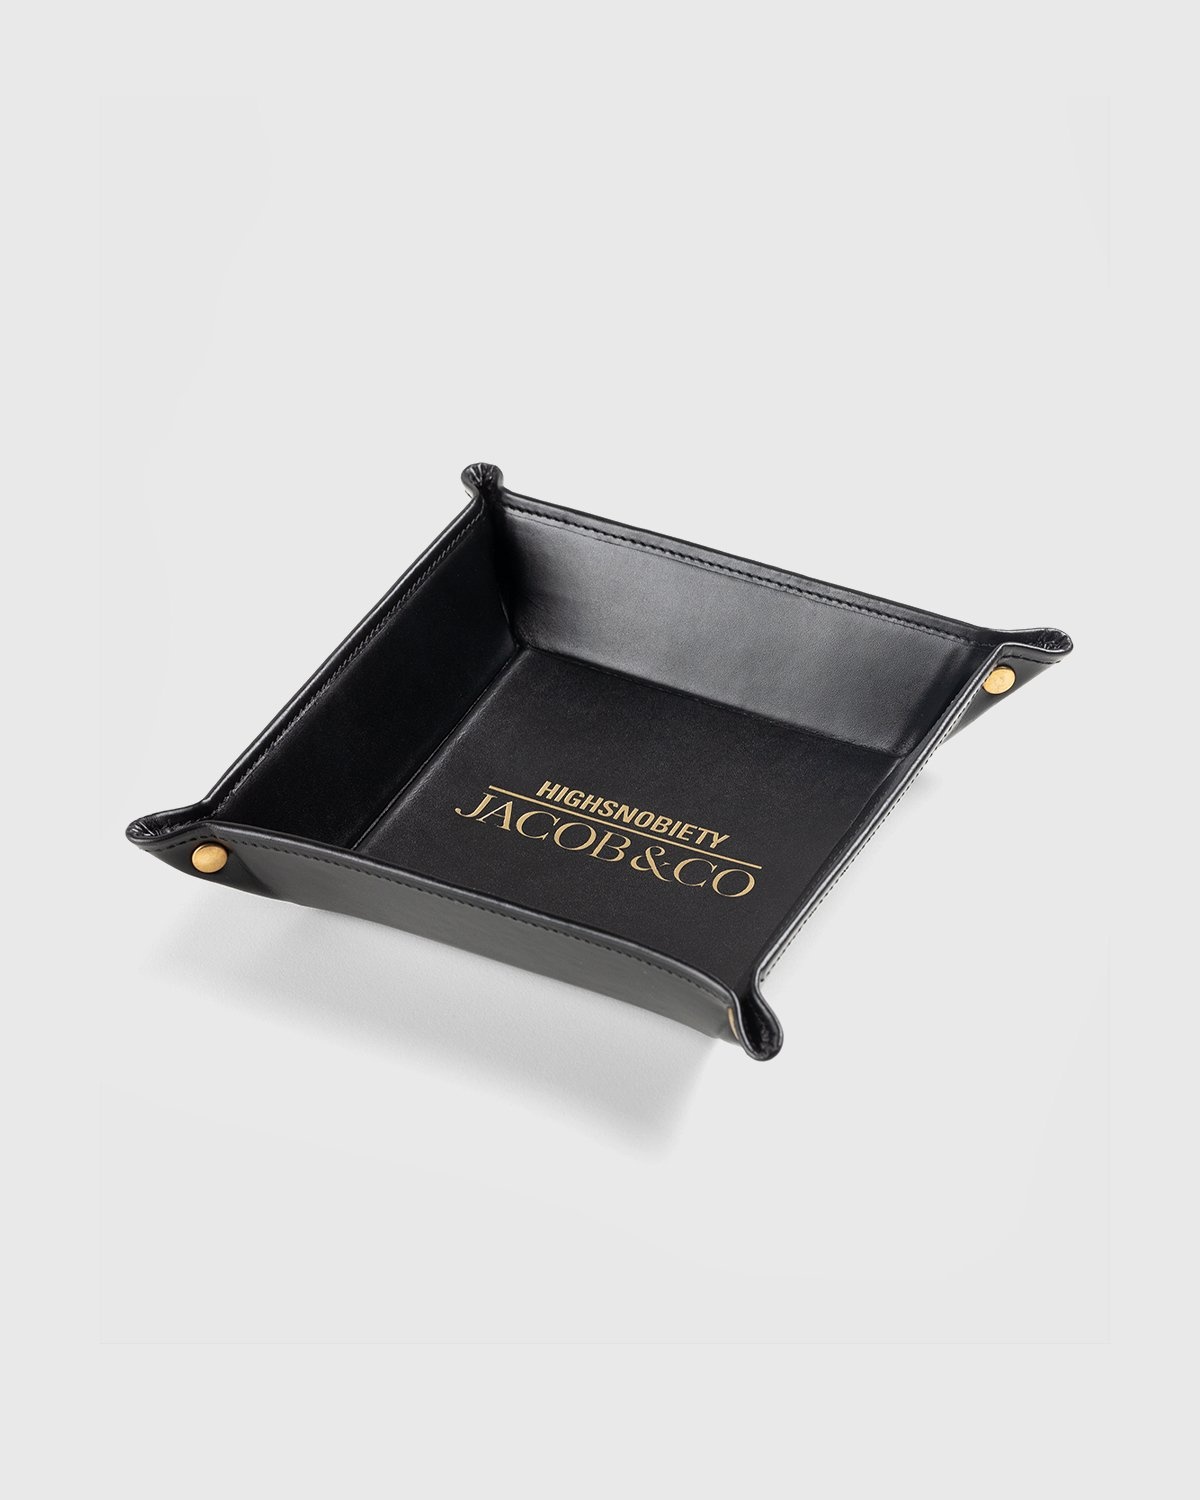 Jacob & Co. x Highsnobiety – Leather Key Tray Black - Desk Accessories - Black - Image 4